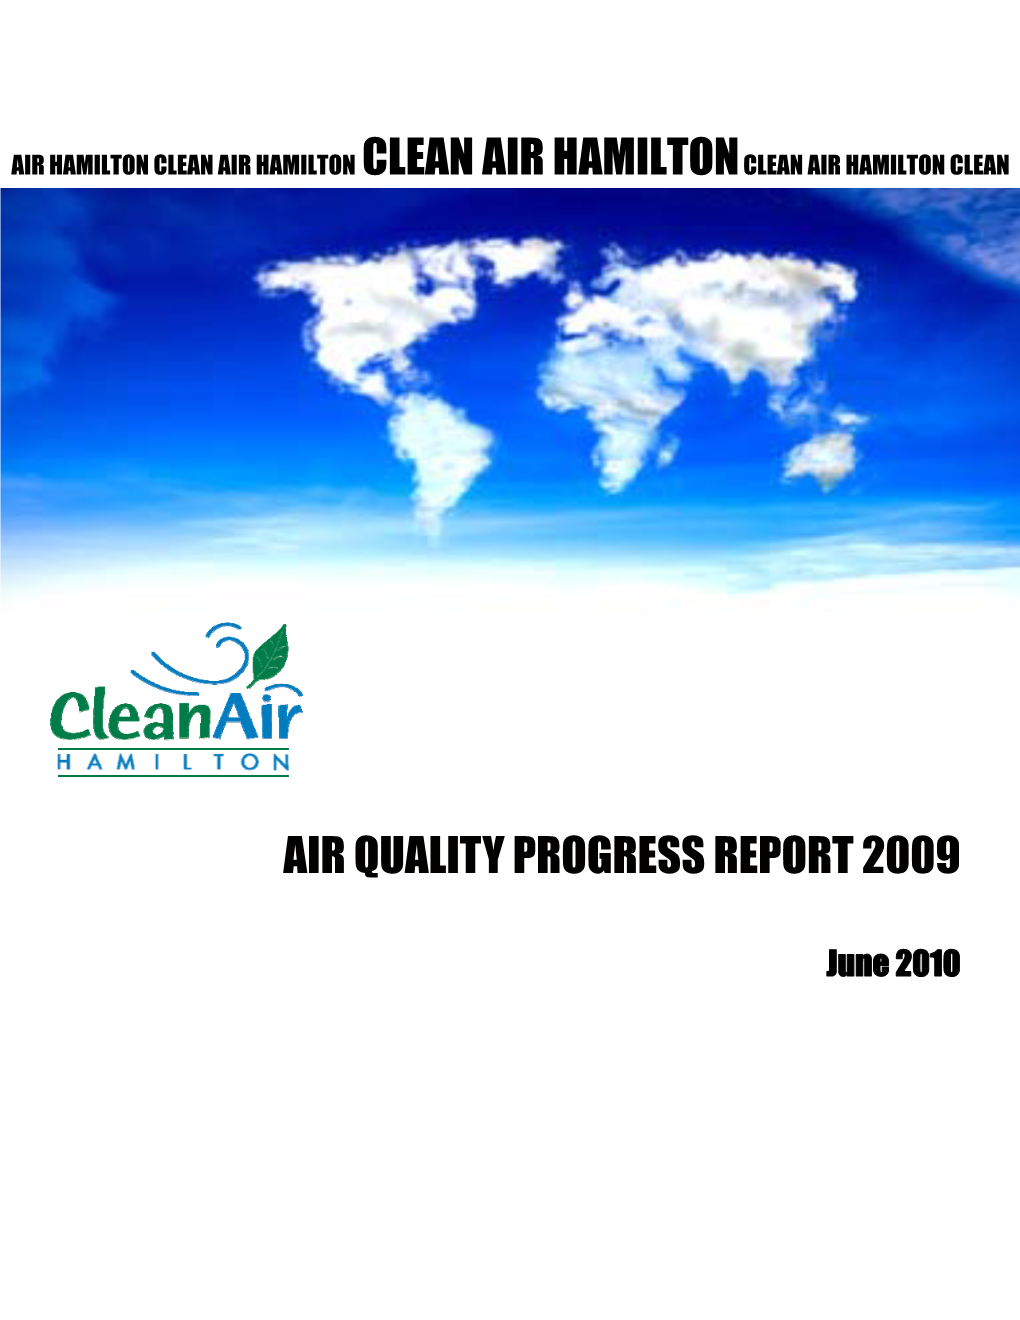 Air Quality Progress Report 2009